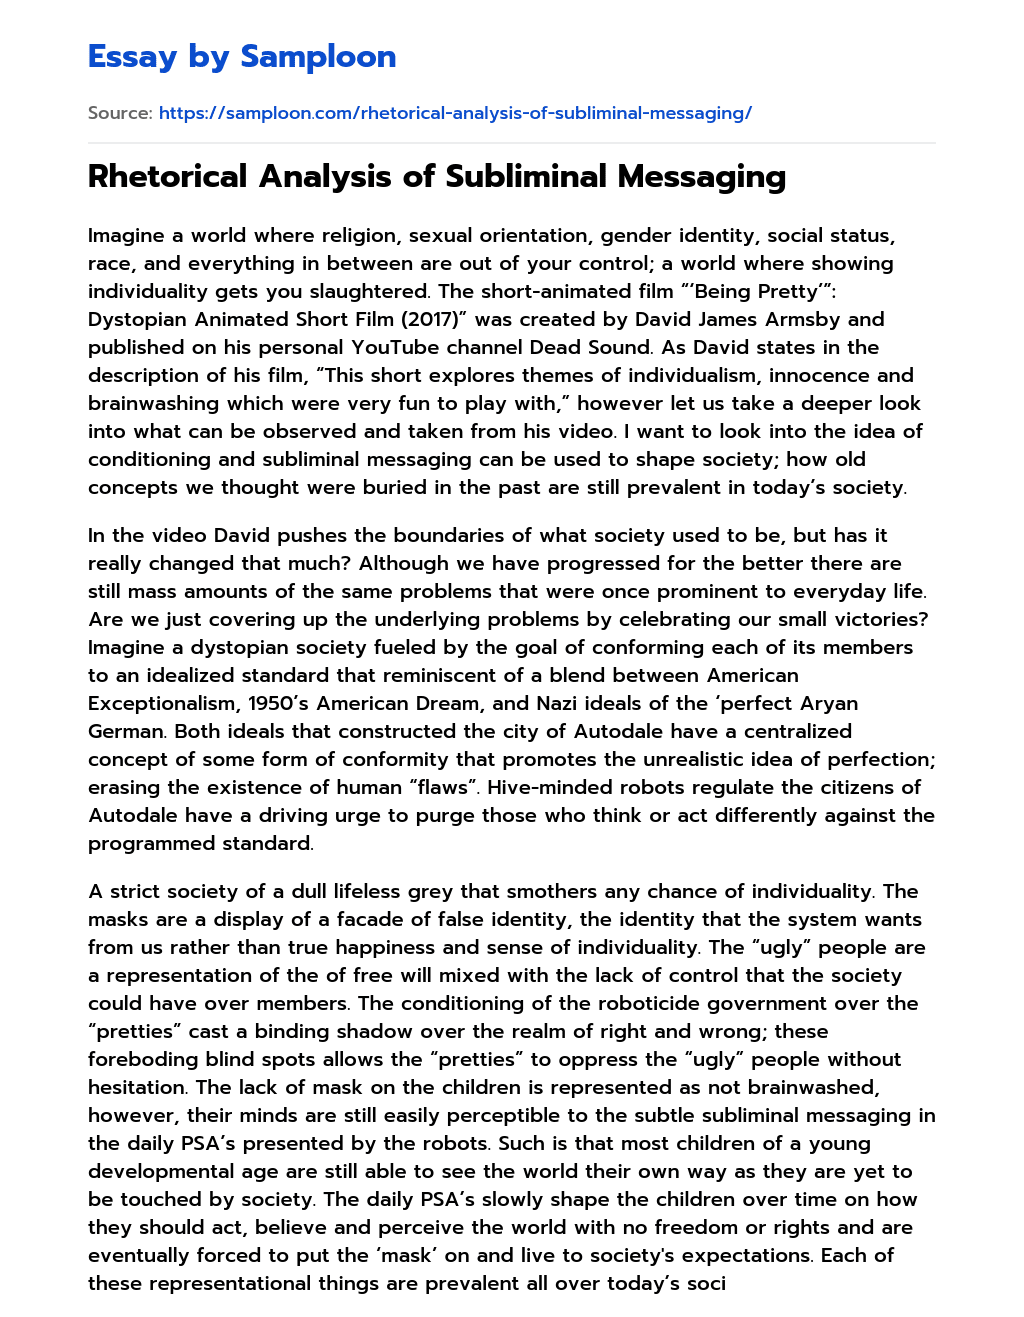 Rhetorical Analysis of Subliminal Messaging essay